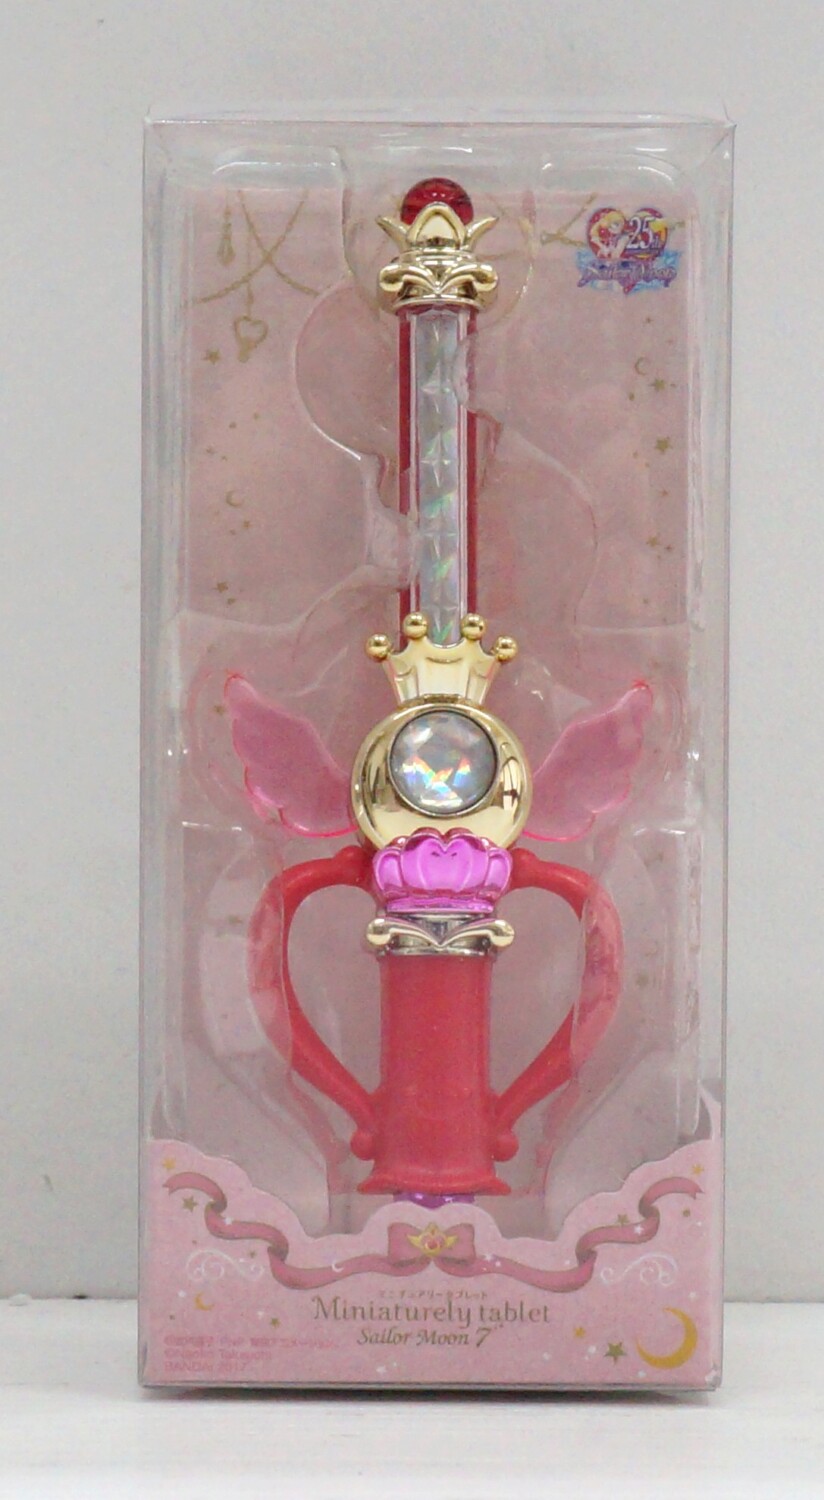 Sailor Moon vol. 7 Miniaturely Tablet. Scettro Lunare di Sailor Moon 10 cm.  Bandai – Emporio di milo